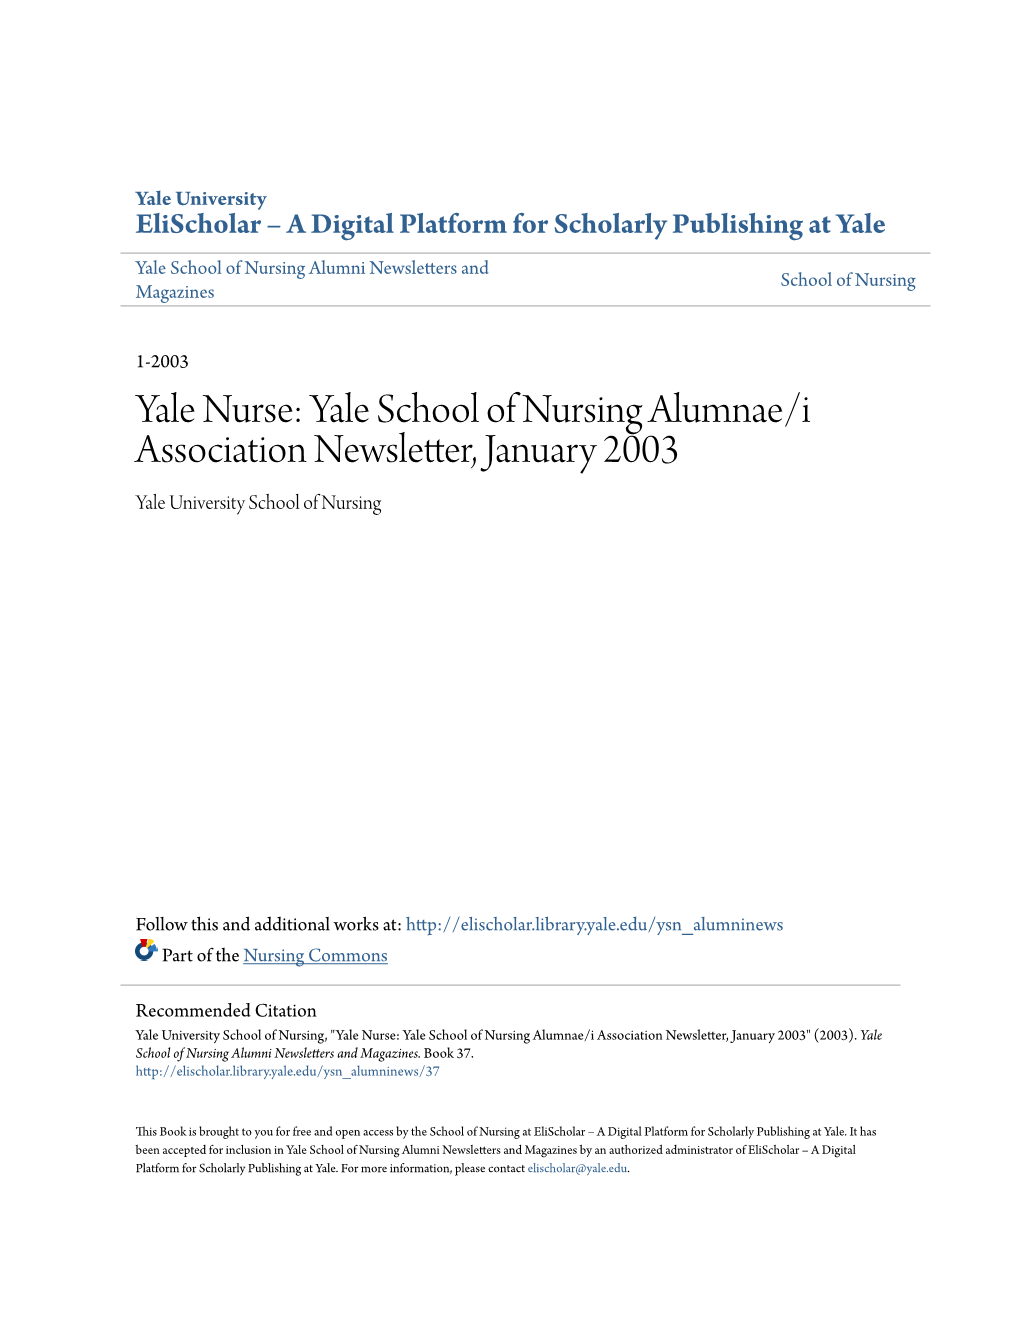 Yale School of Nursing Alumni Newsletters and School of Nursing Magazines